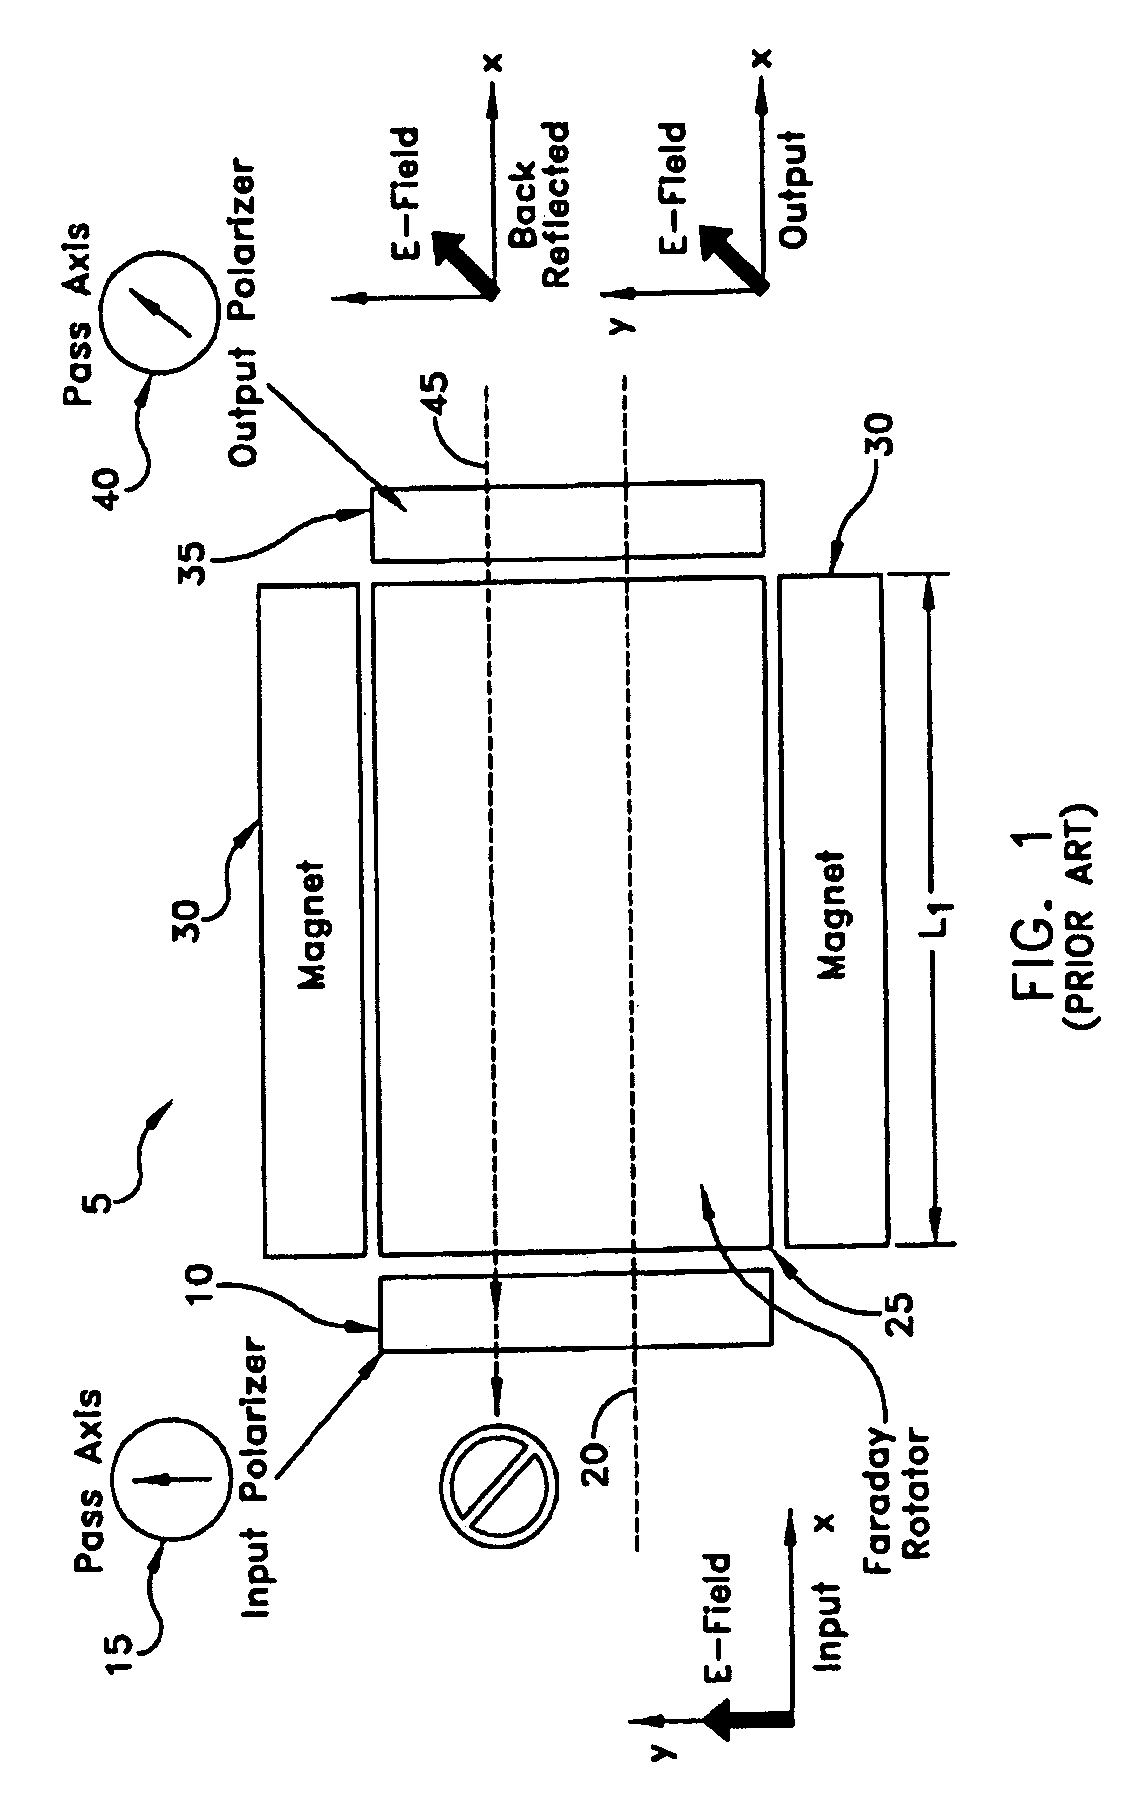 Compact multipass optical isolator